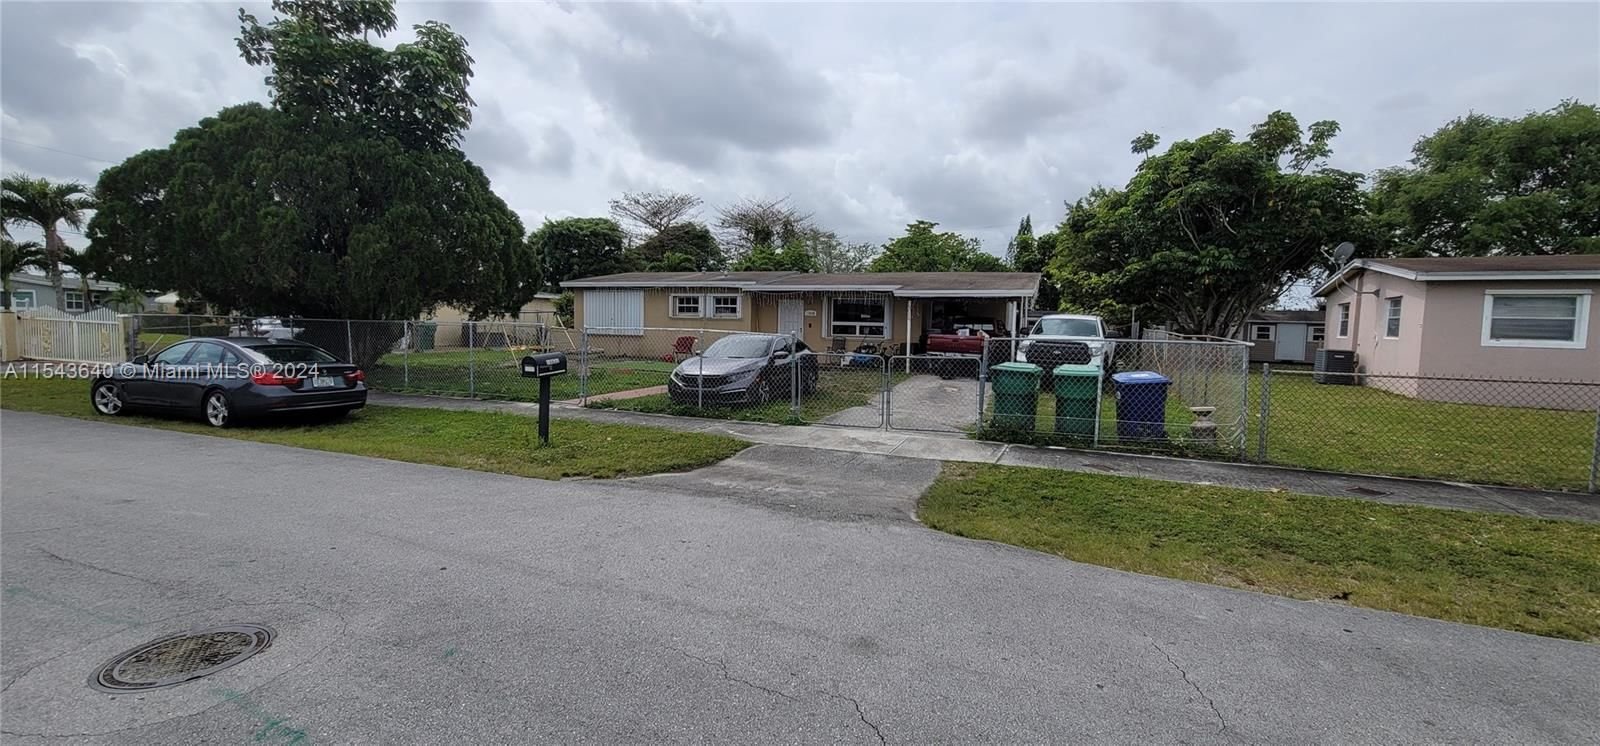 Real estate property located at 19630 39th Ct, Miami-Dade County, CAROL CITY GDNS 1ST ADDN, Miami Gardens, FL